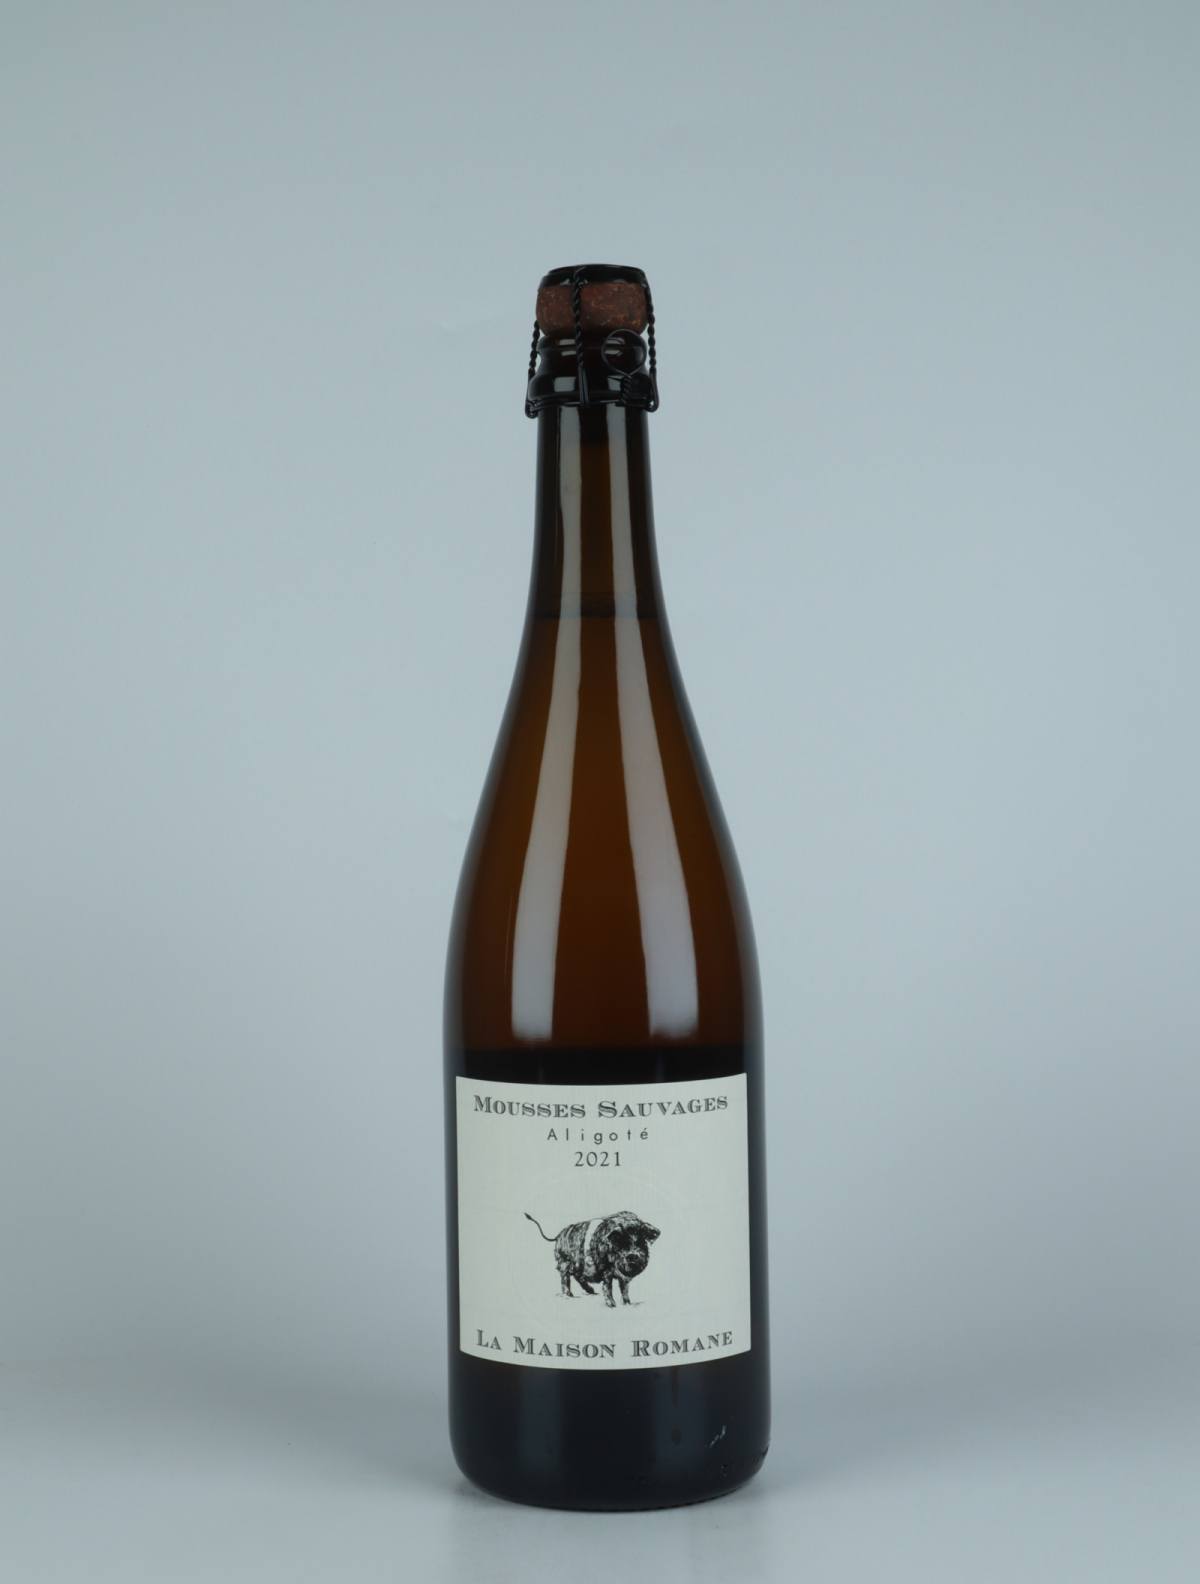 A bottle 2021 Mousses Sauvages Aligoté Beer from La Maison Romane, Burgundy in France